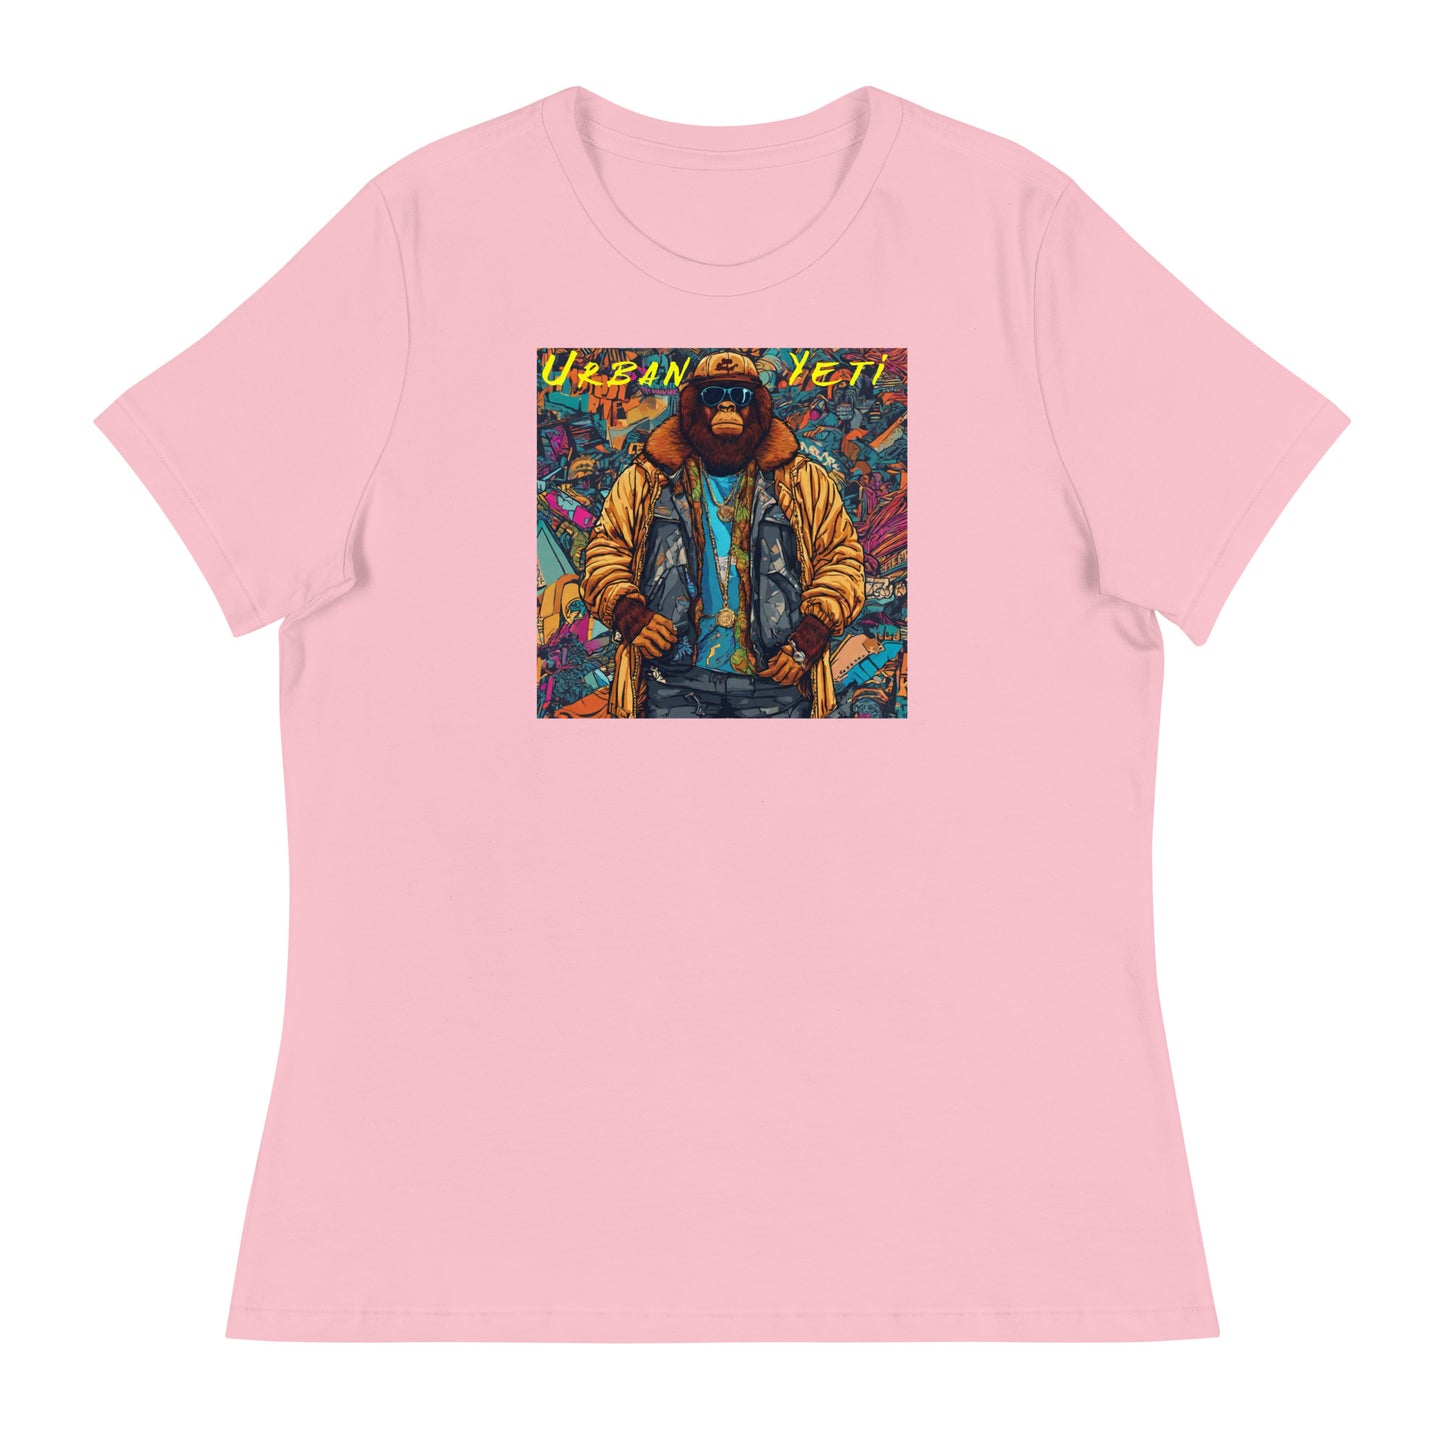 Bigfoot: The Urban Yeti Women's T-Shirt Pink